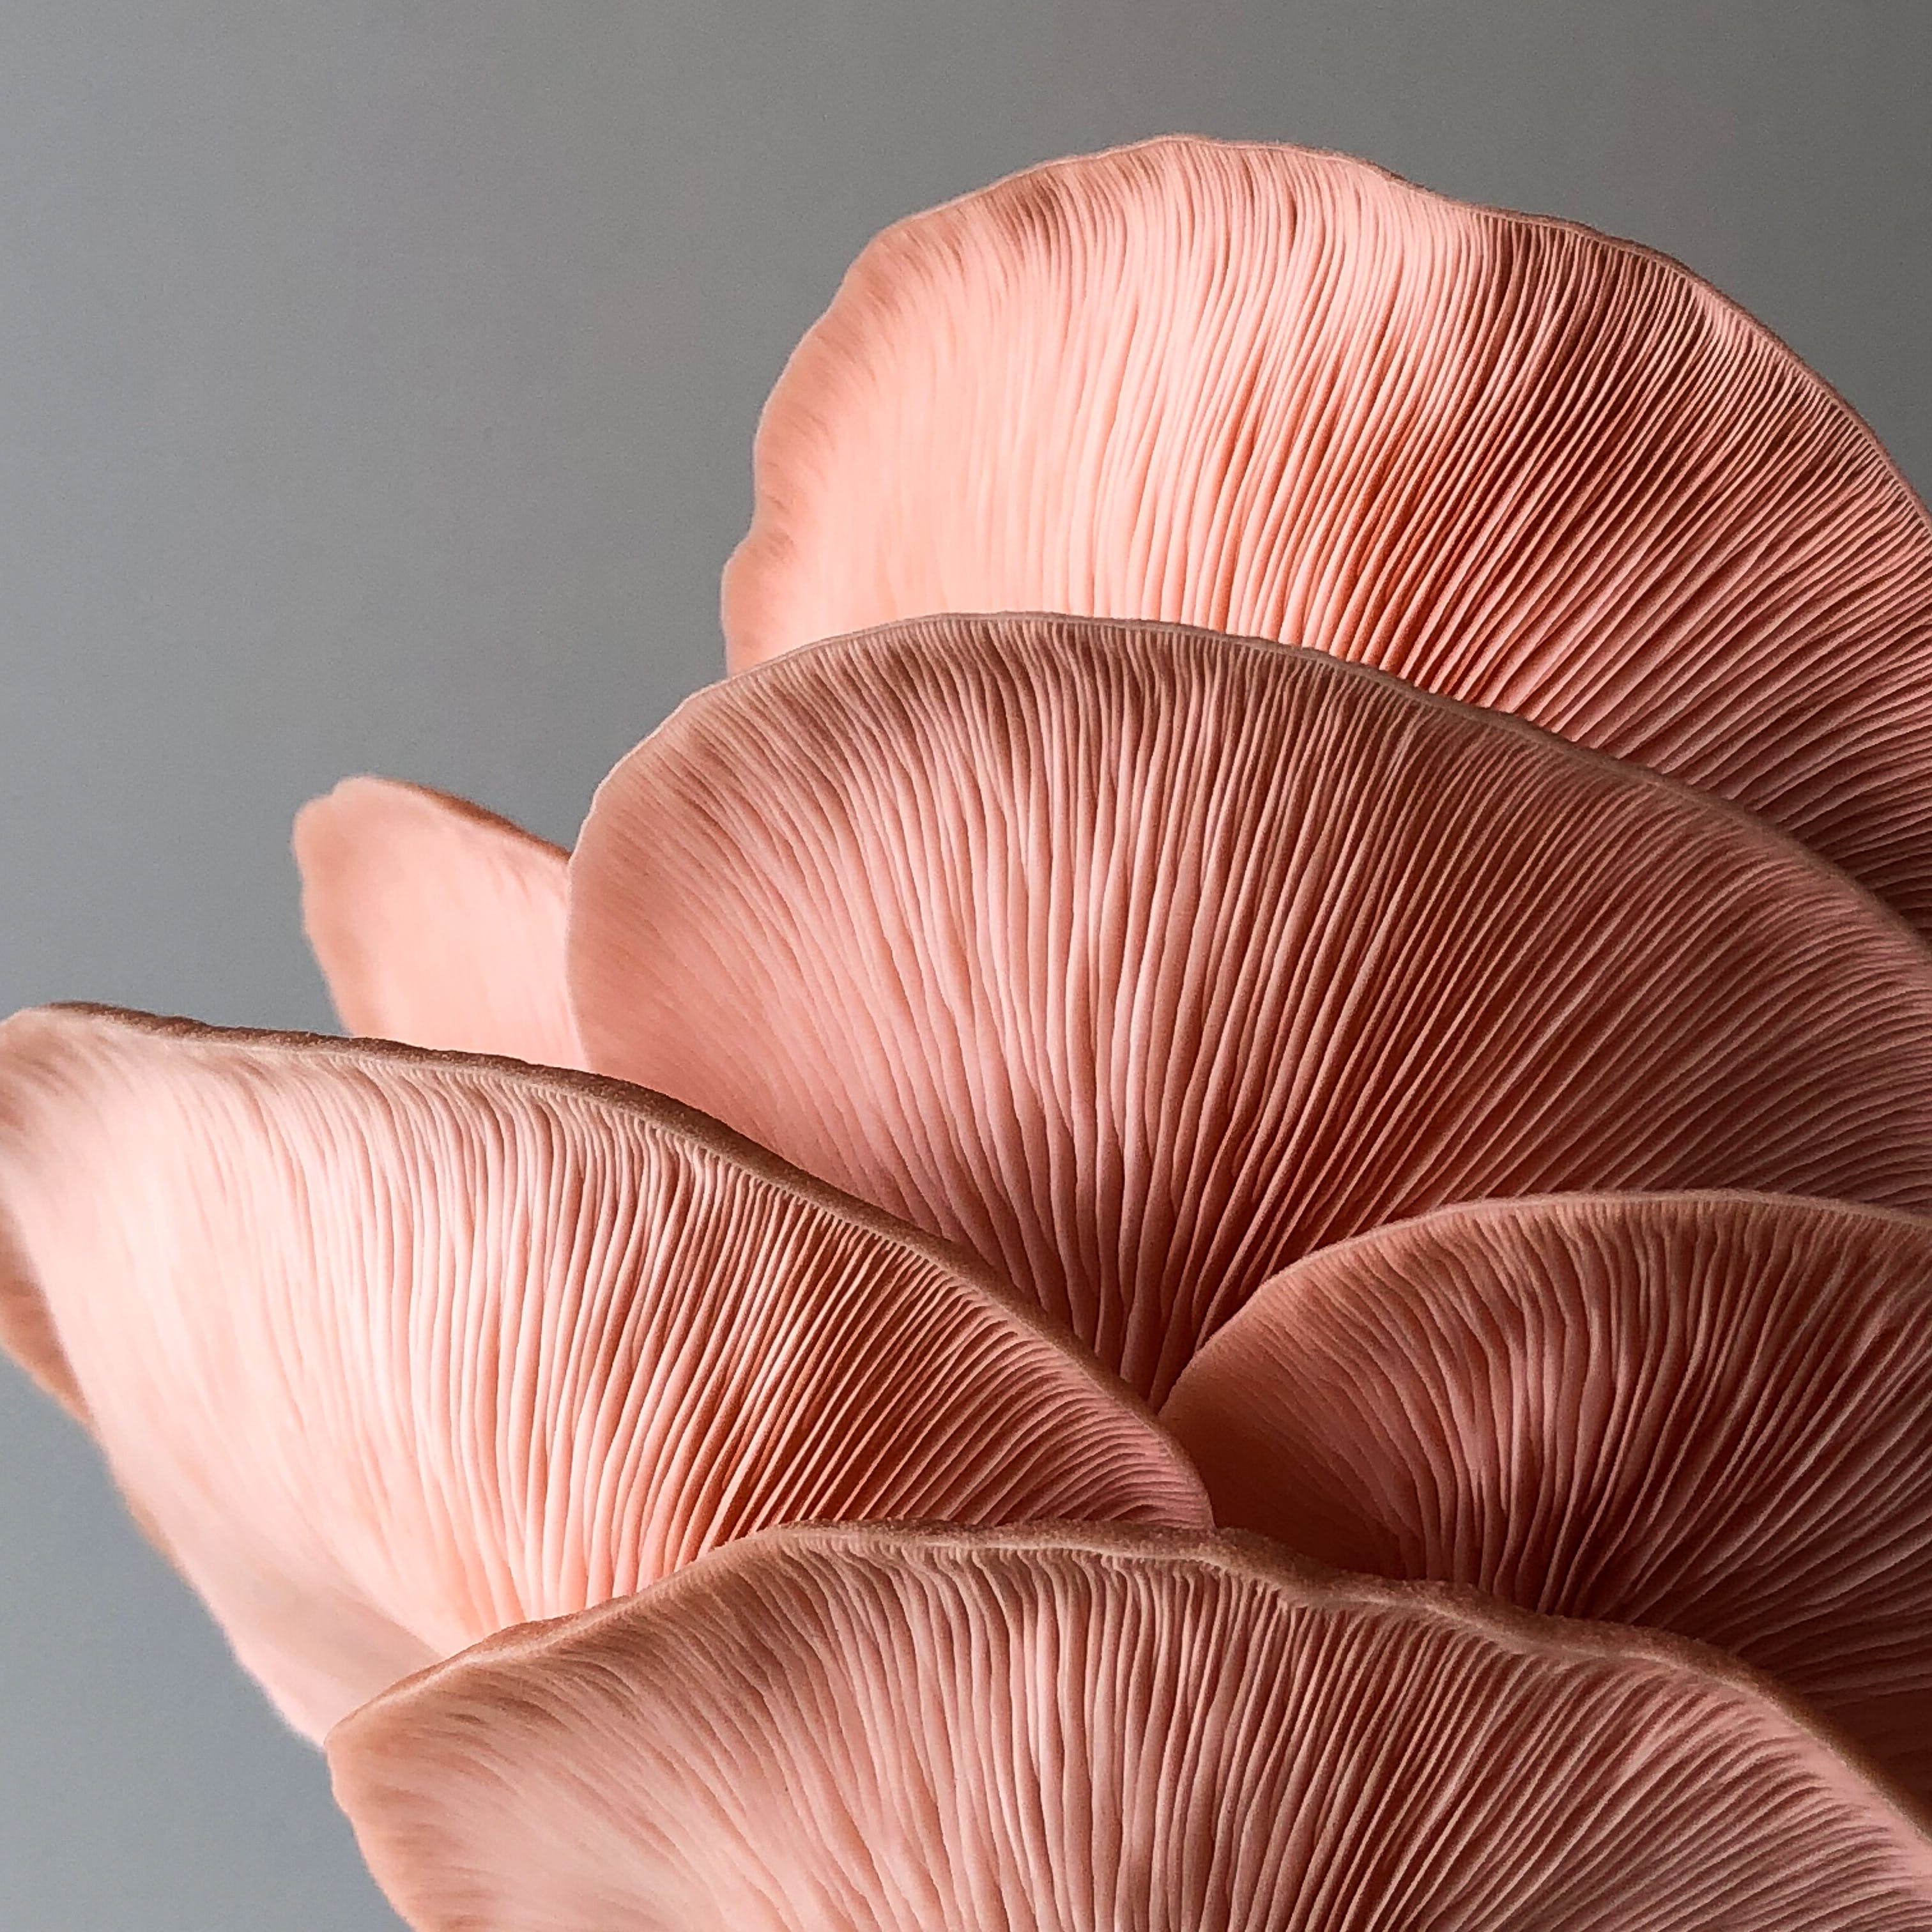 Mushroom Growing Masterclass - Kingaroy Accommodation